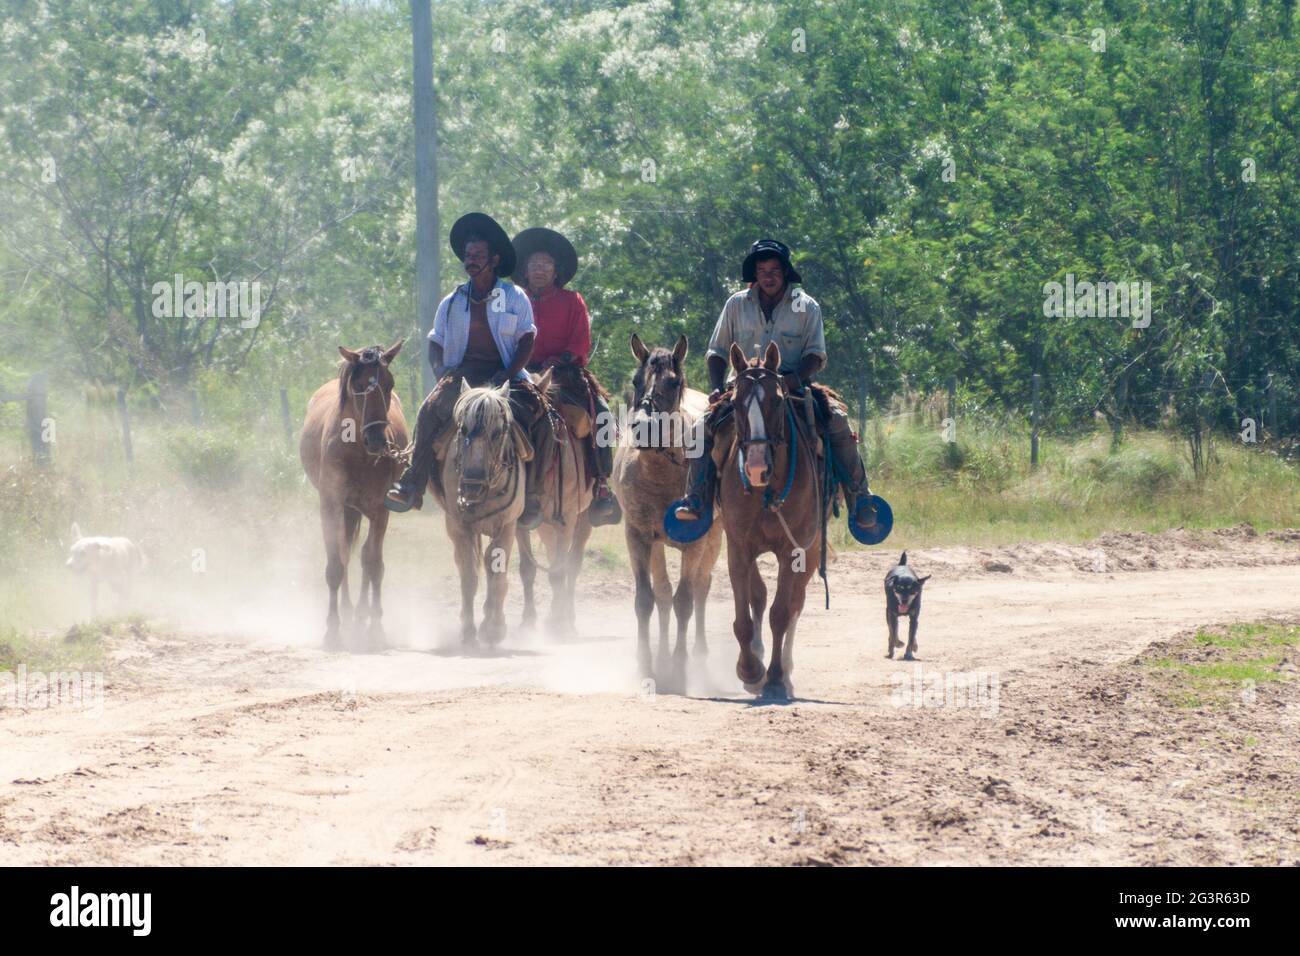 COLONIA PELLEGRINI, ARGENTINA - FEB 14, 2015: Gaucho people on horses on a dust road in Colonia Pellegrini in Esteros del Ibera, Argentina Stock Photo